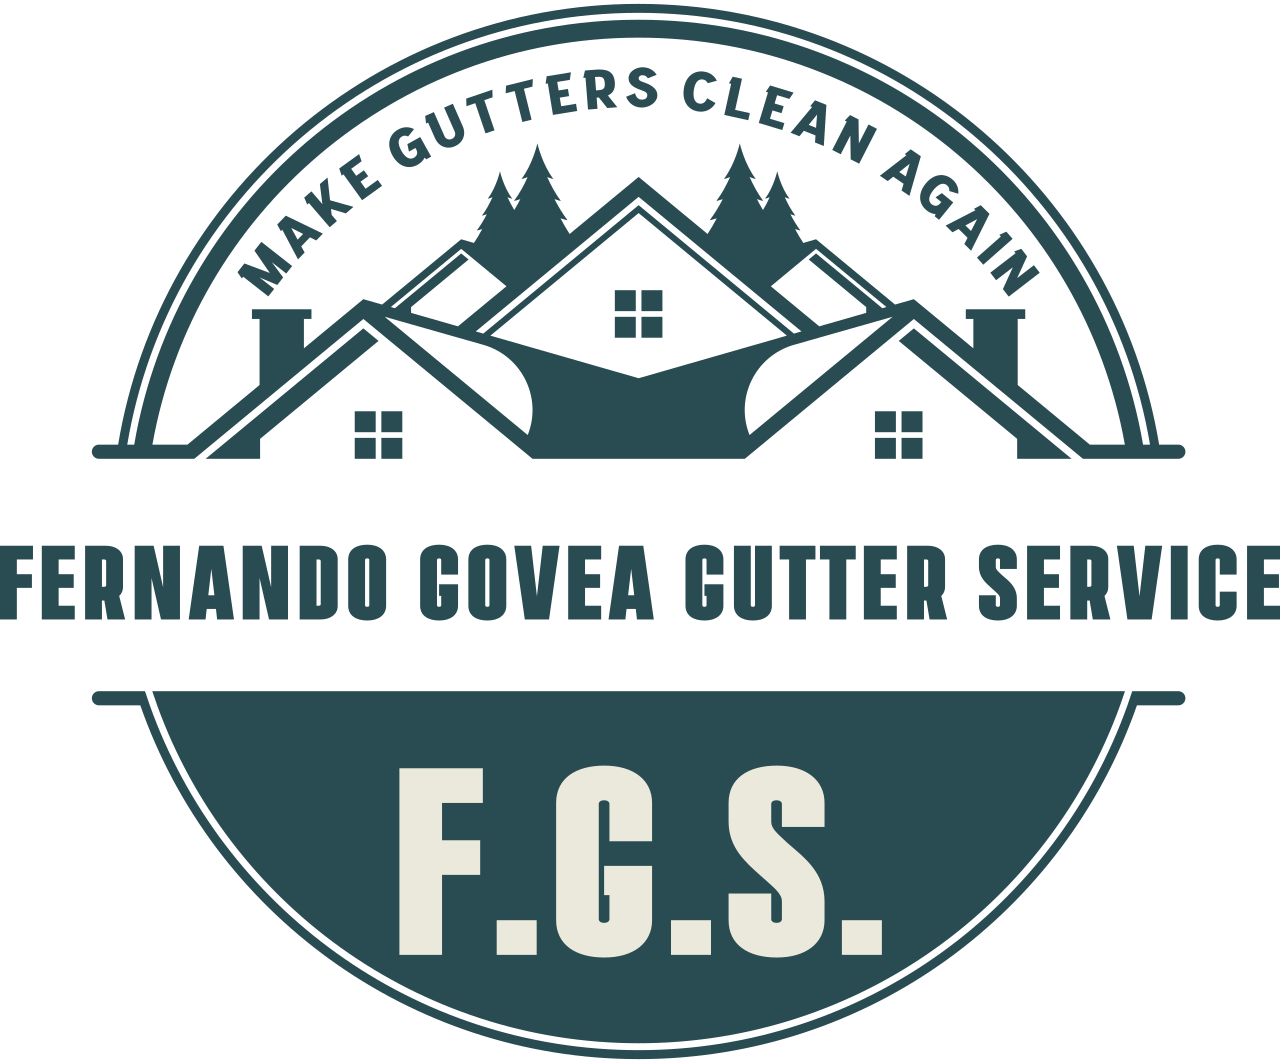 Fernando govea gutter service's logo